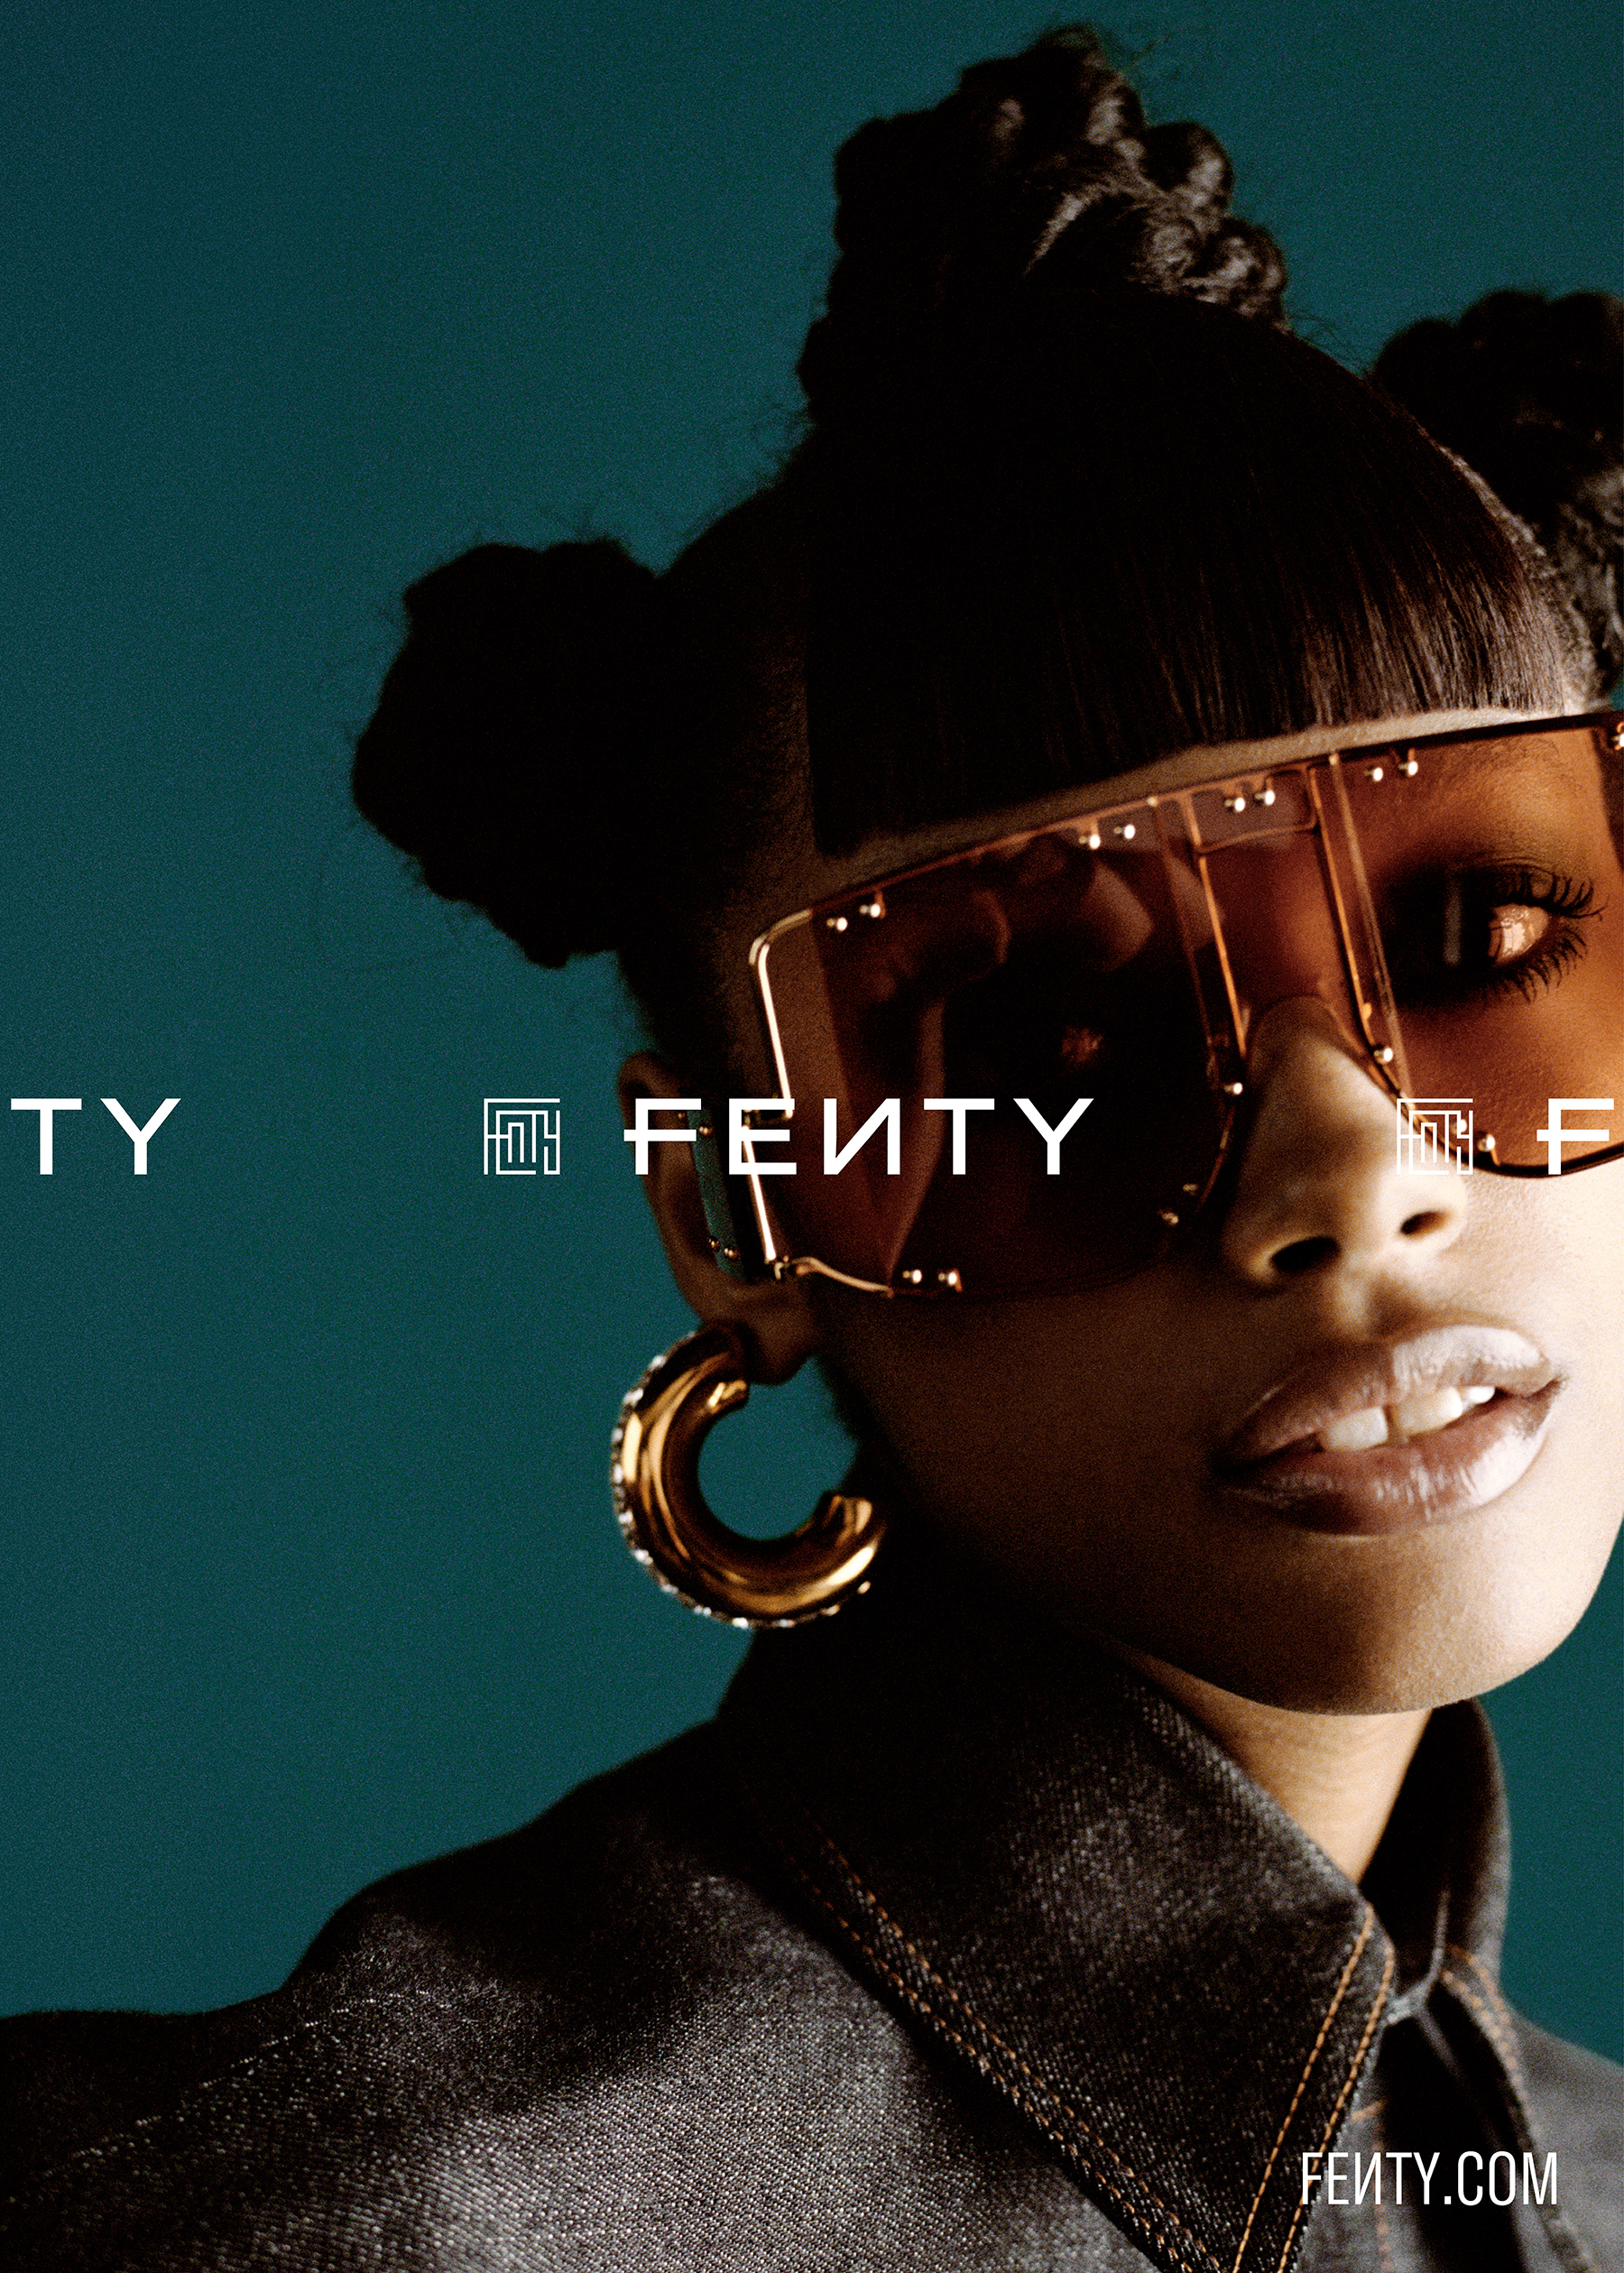 Fenty Release Ad Campaign